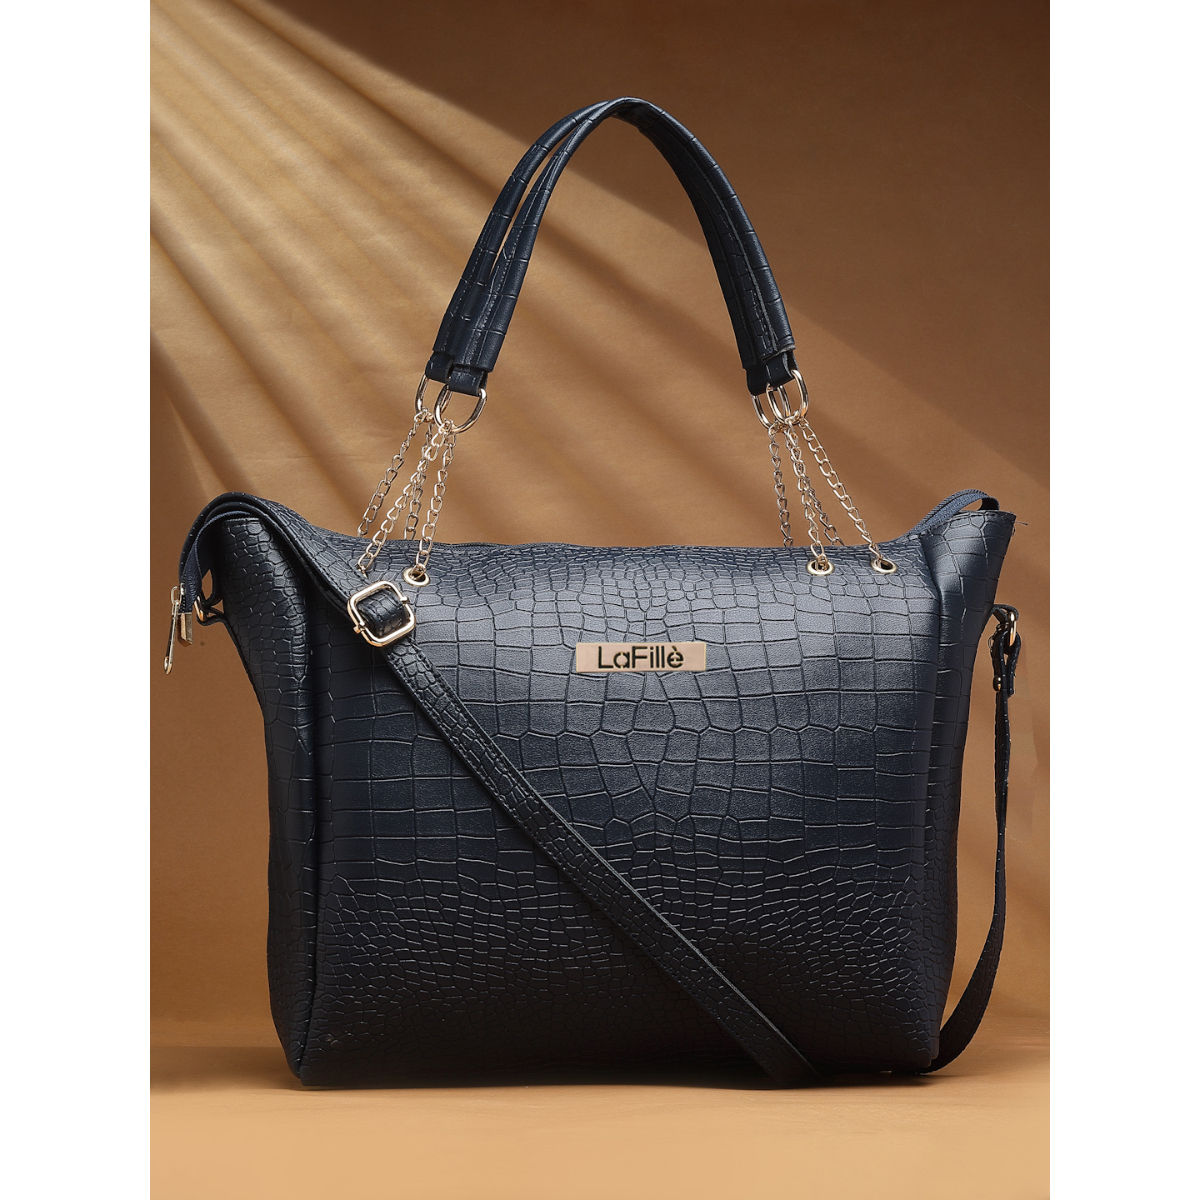 Women Handbags Office Lady Handbags Simple Style Shoulder Bag for Women's  Gift 5 Colors | Wish